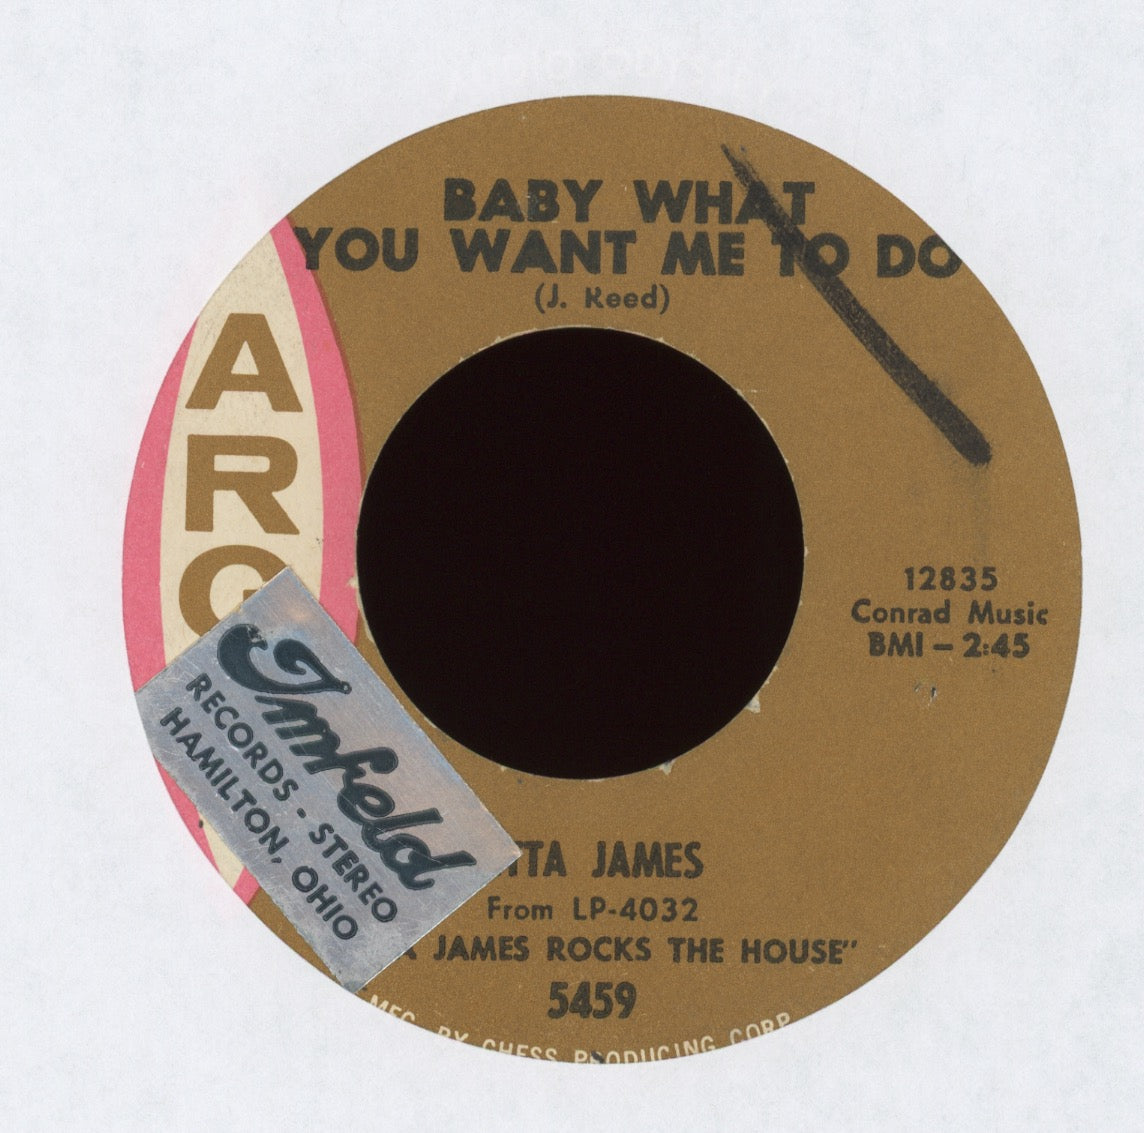 Etta James - What I Say on Argo R&B 45